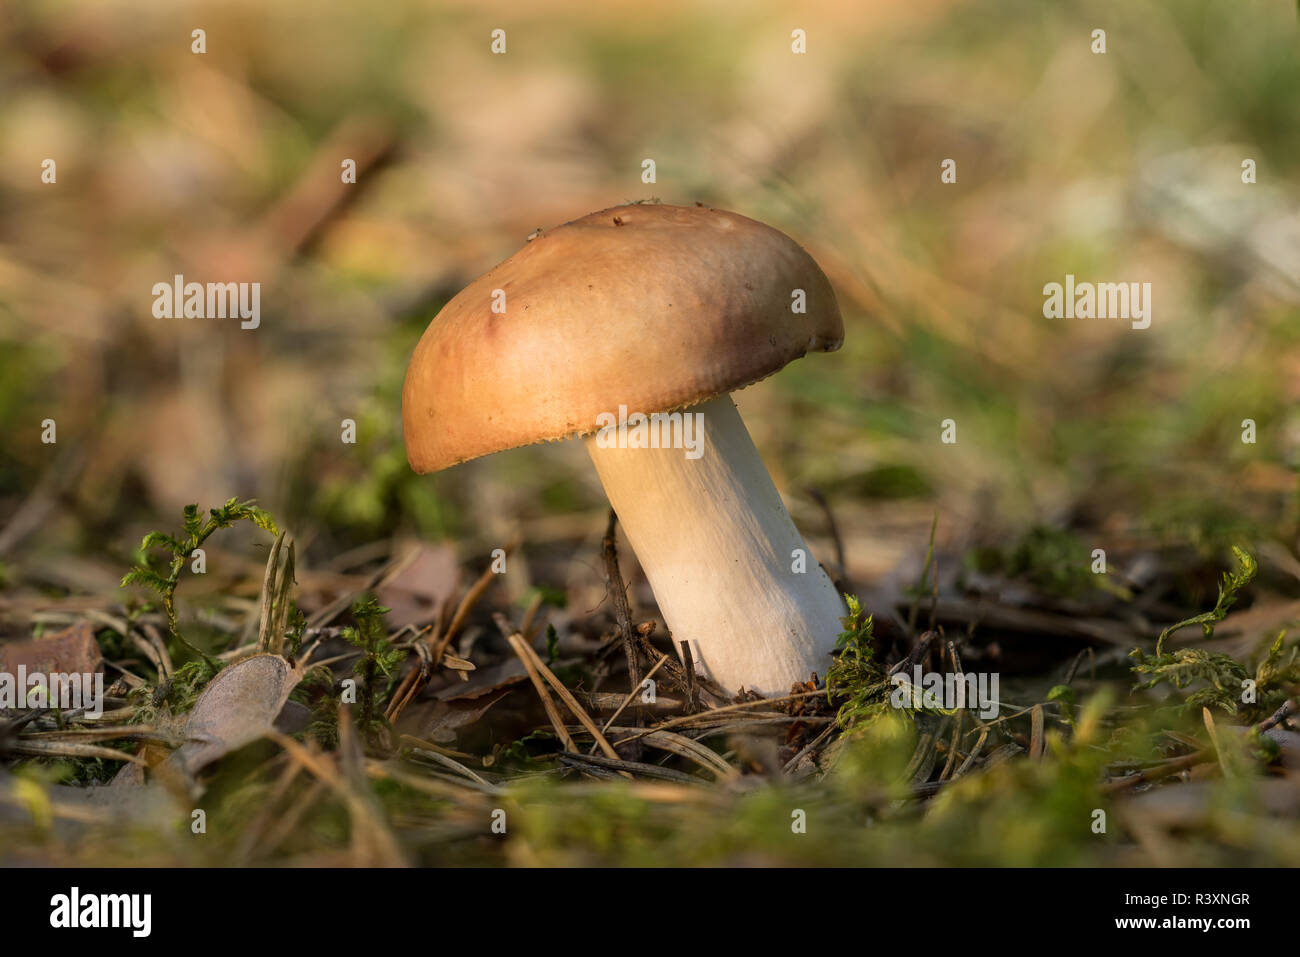 Russula decolorans mushroom is edible wild fungus. Orange mushroom, natural environment background Stock Photo